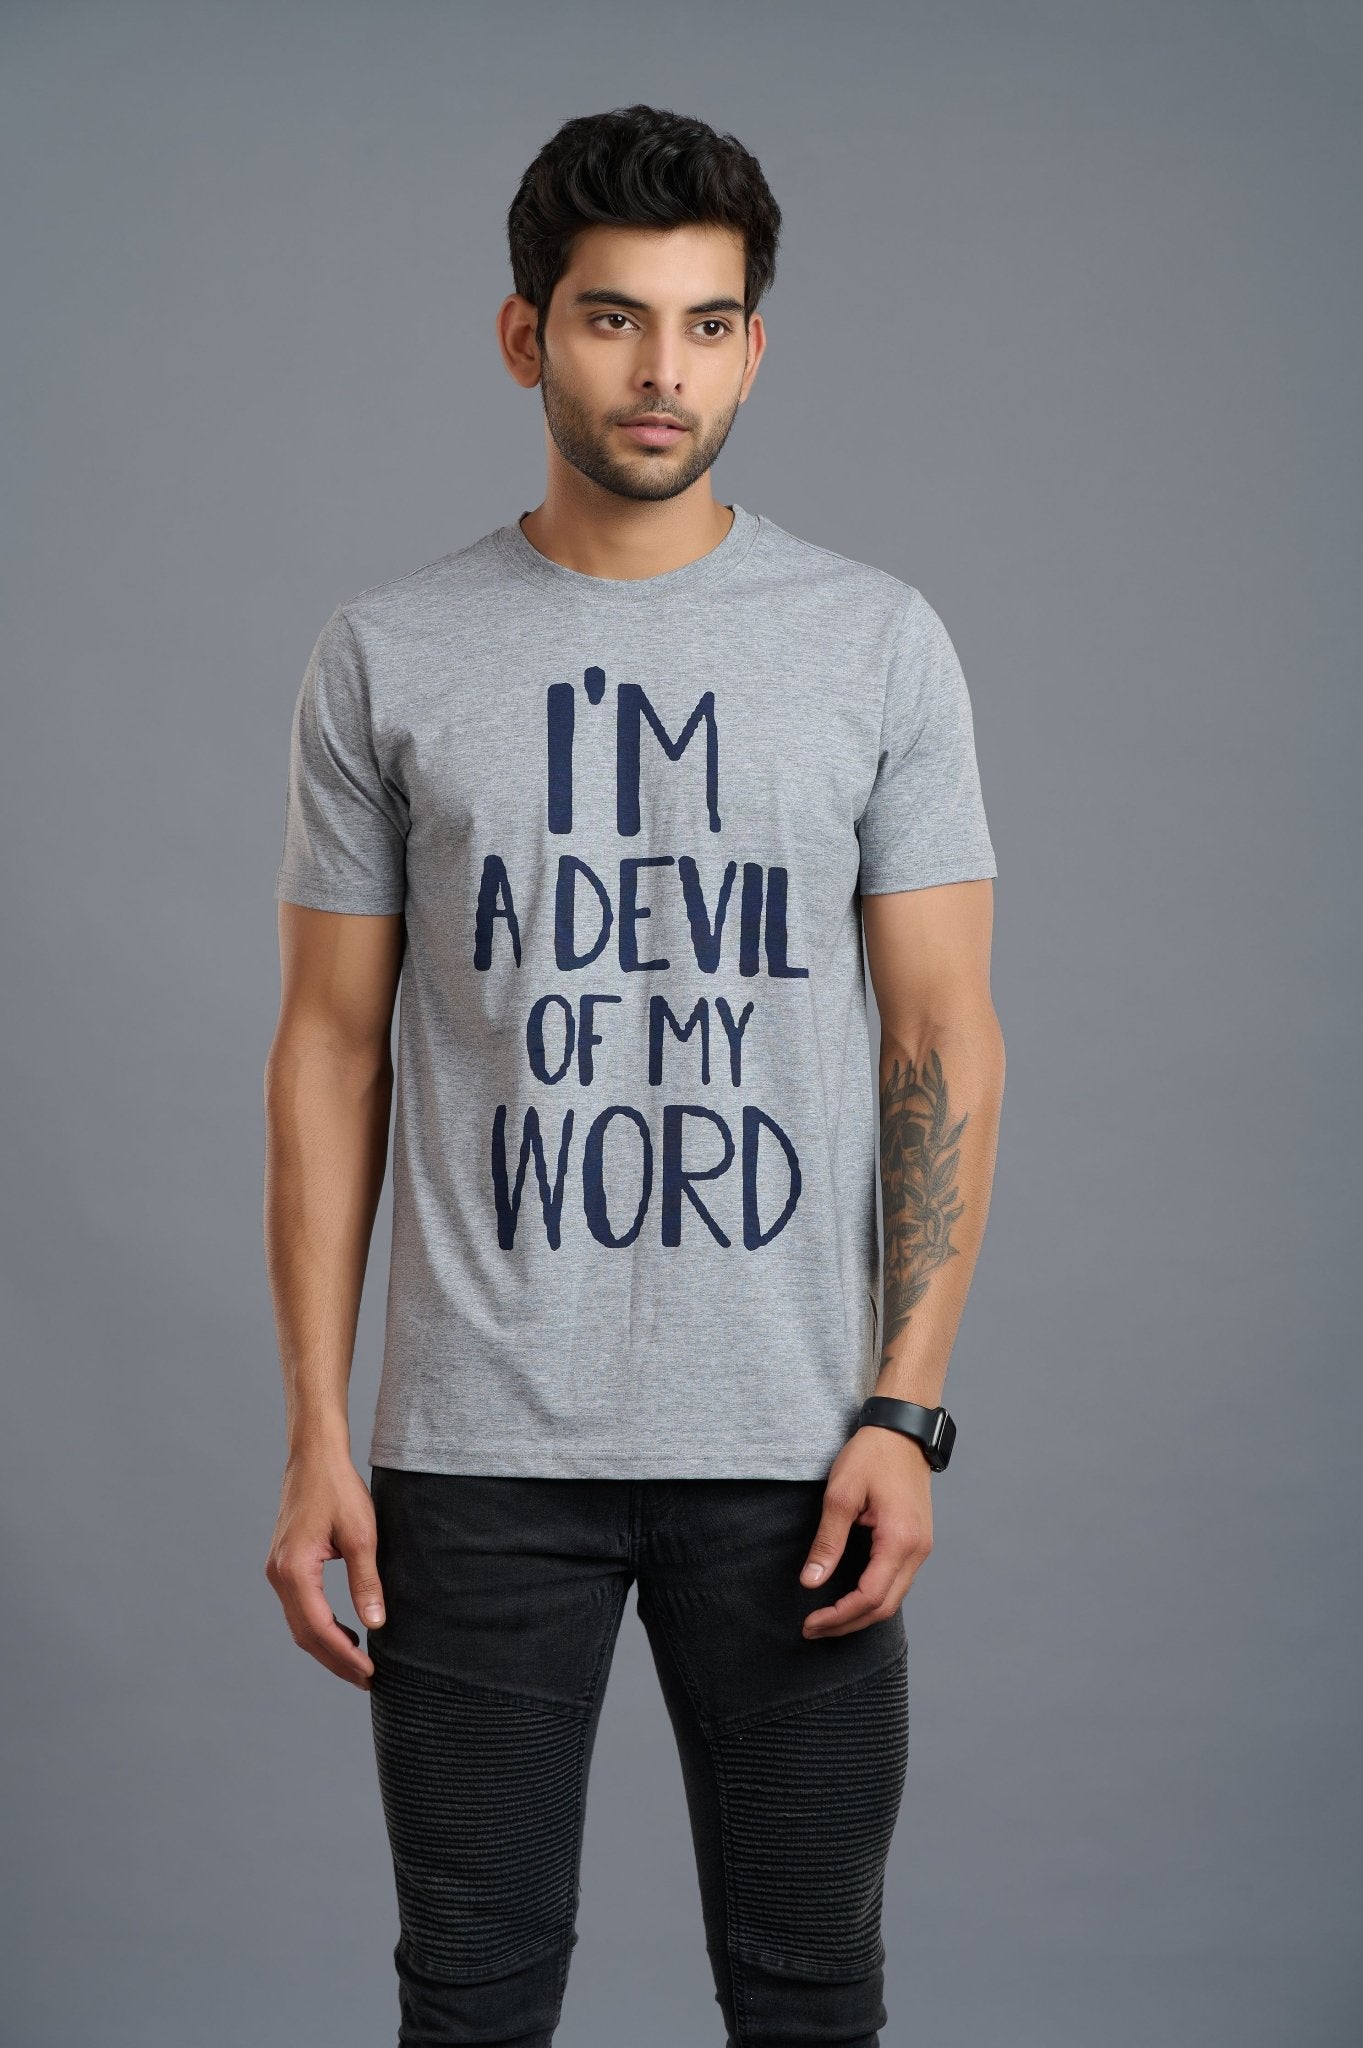 I'm Devil of My Word Printed Grey T-Shirt for Men - Go Devil